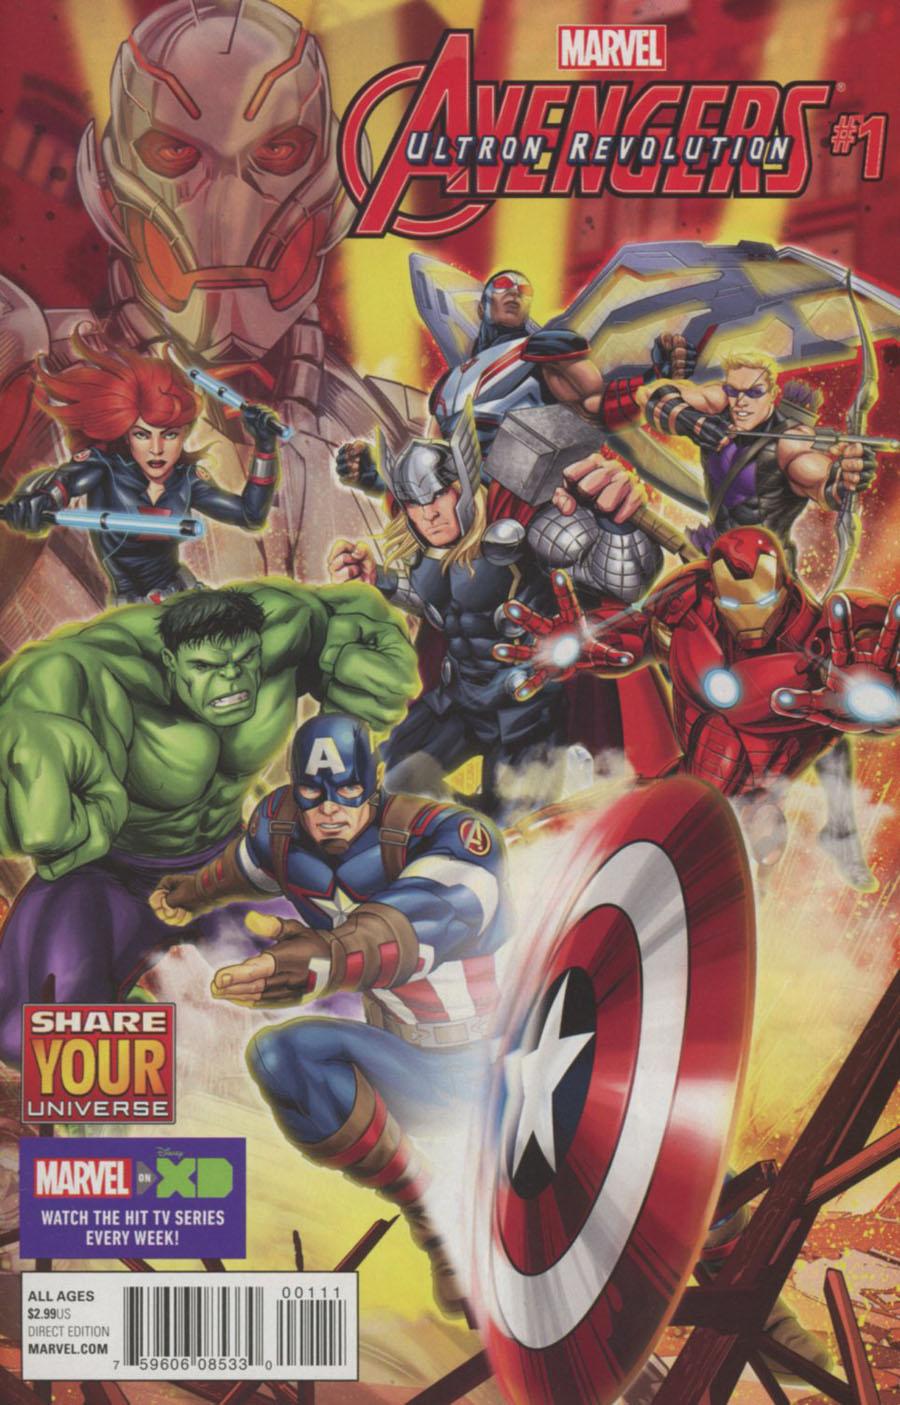 Marvel Universe Avengers Ultron Revolution Vol. 1 #1